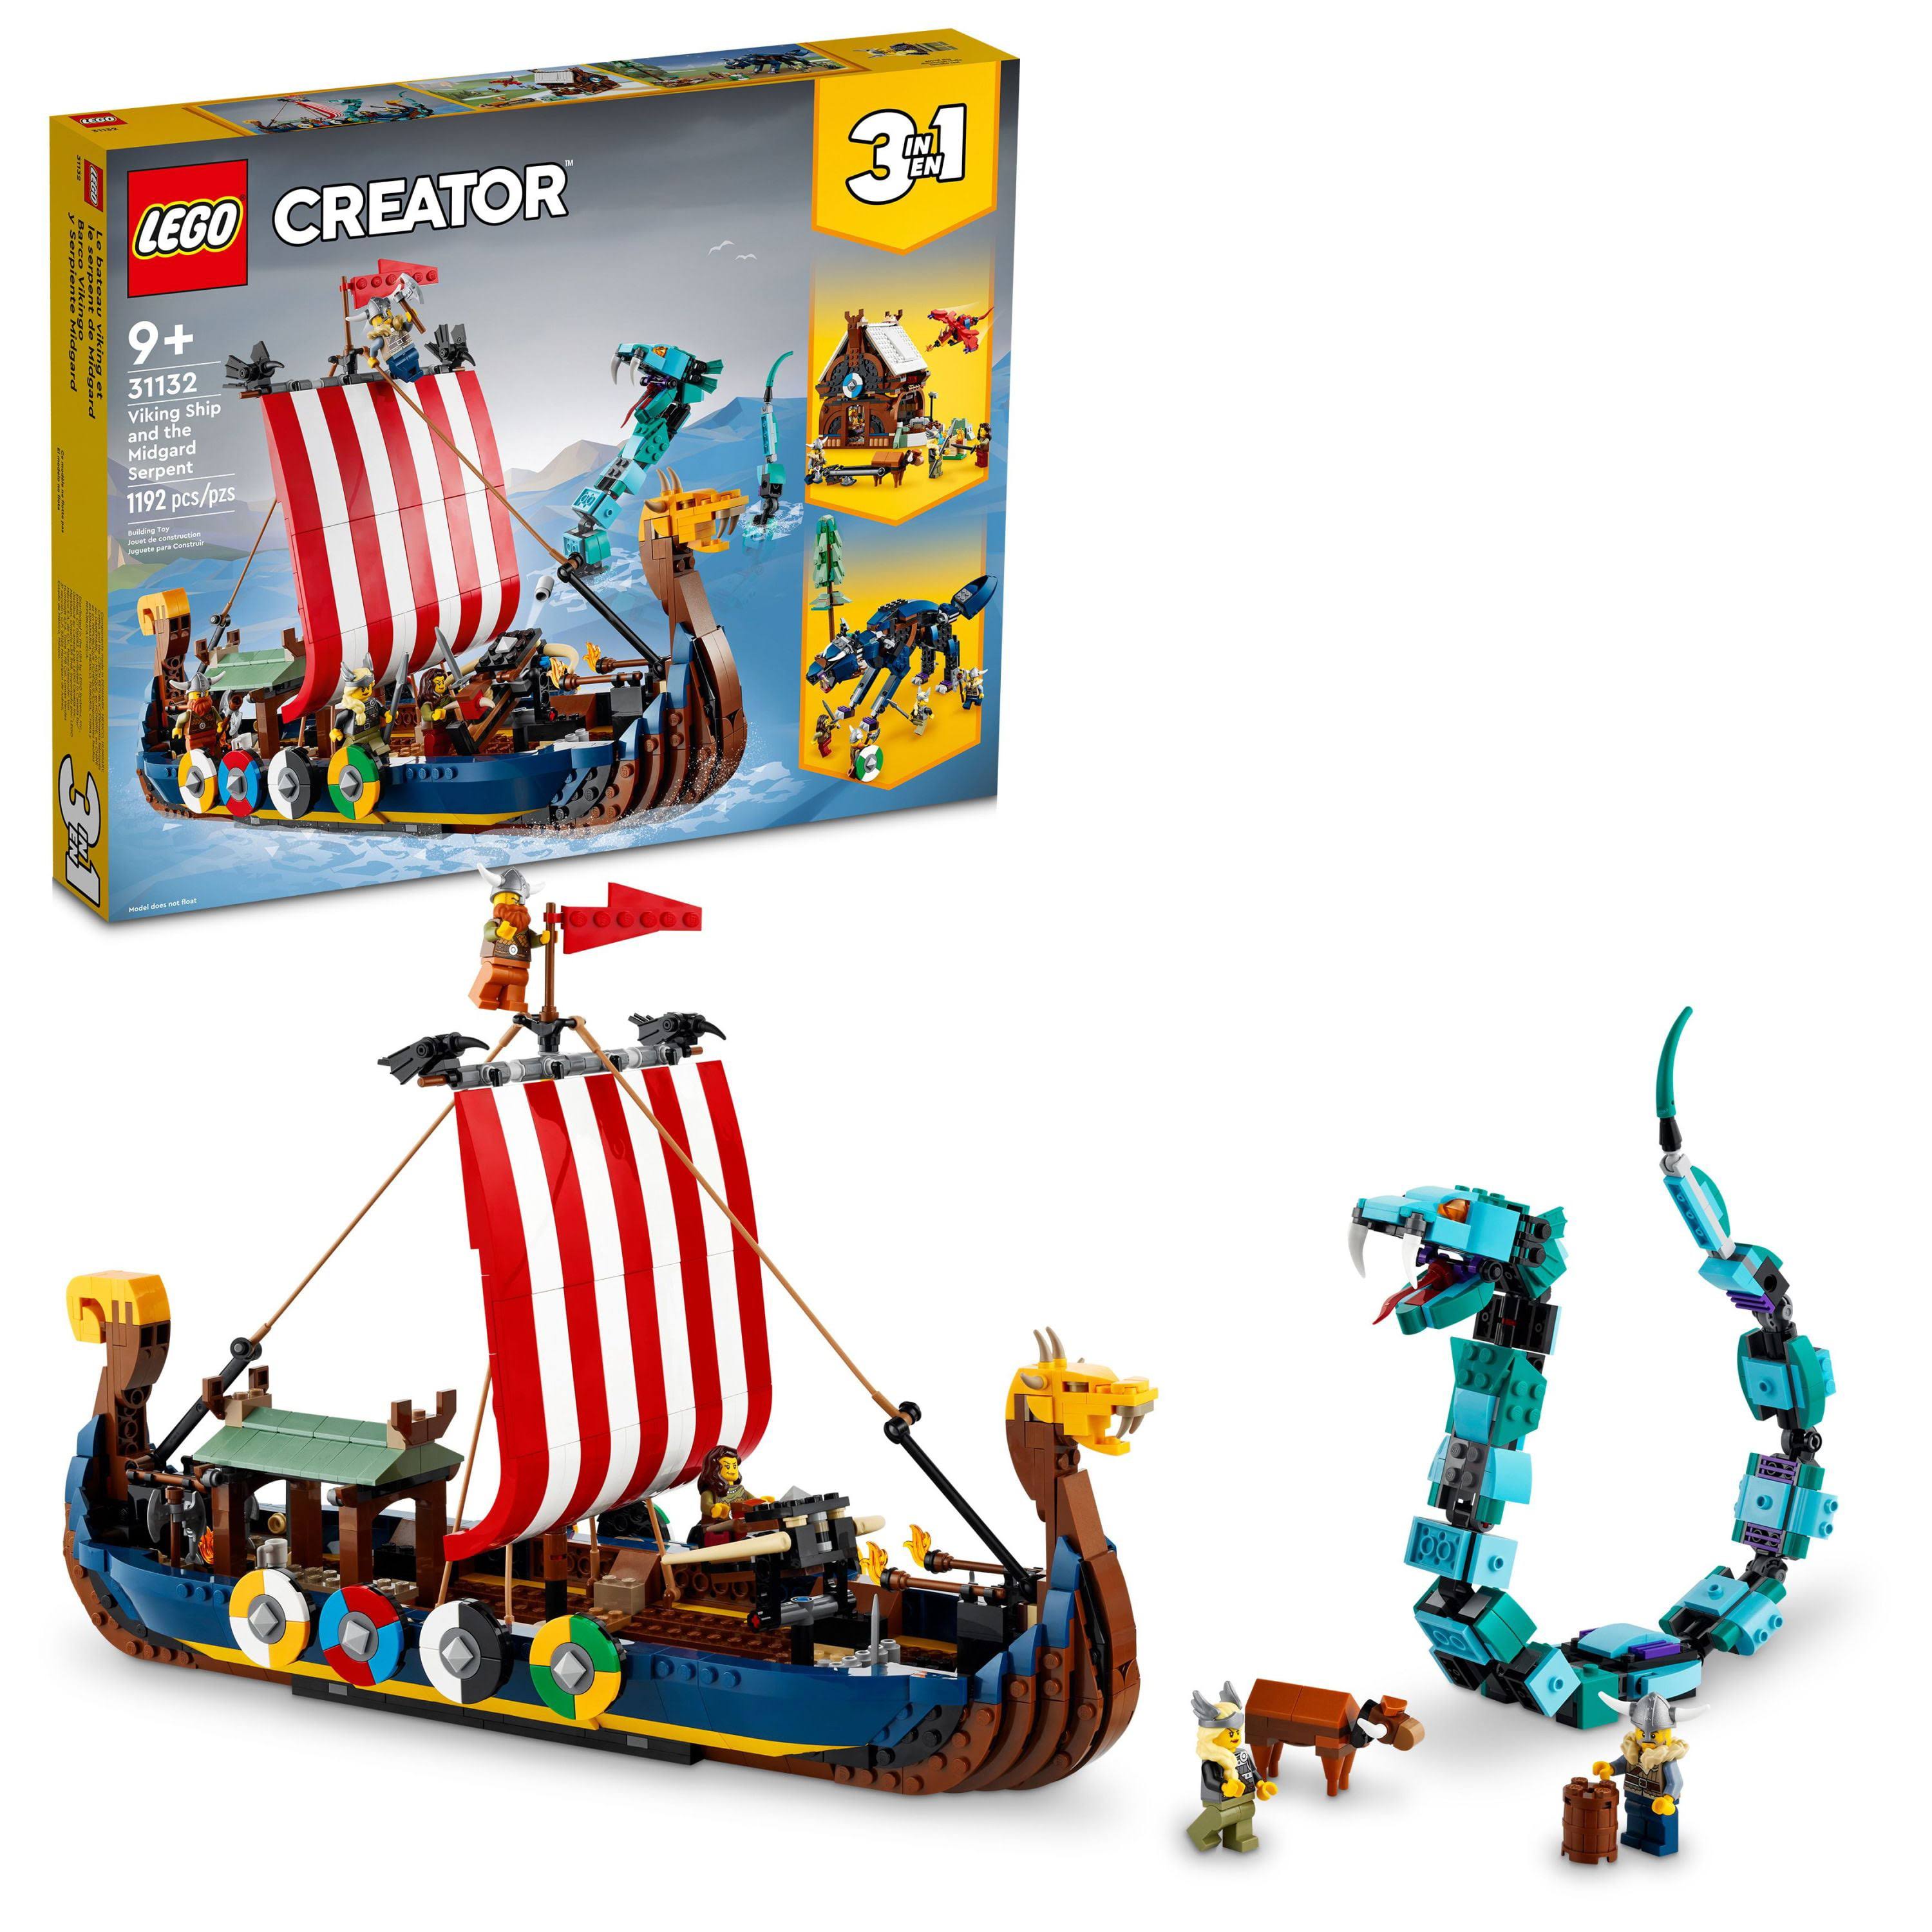 LEGO CREATOR: 3in1 Viking Ship and Midgard Serpent Set (31132)